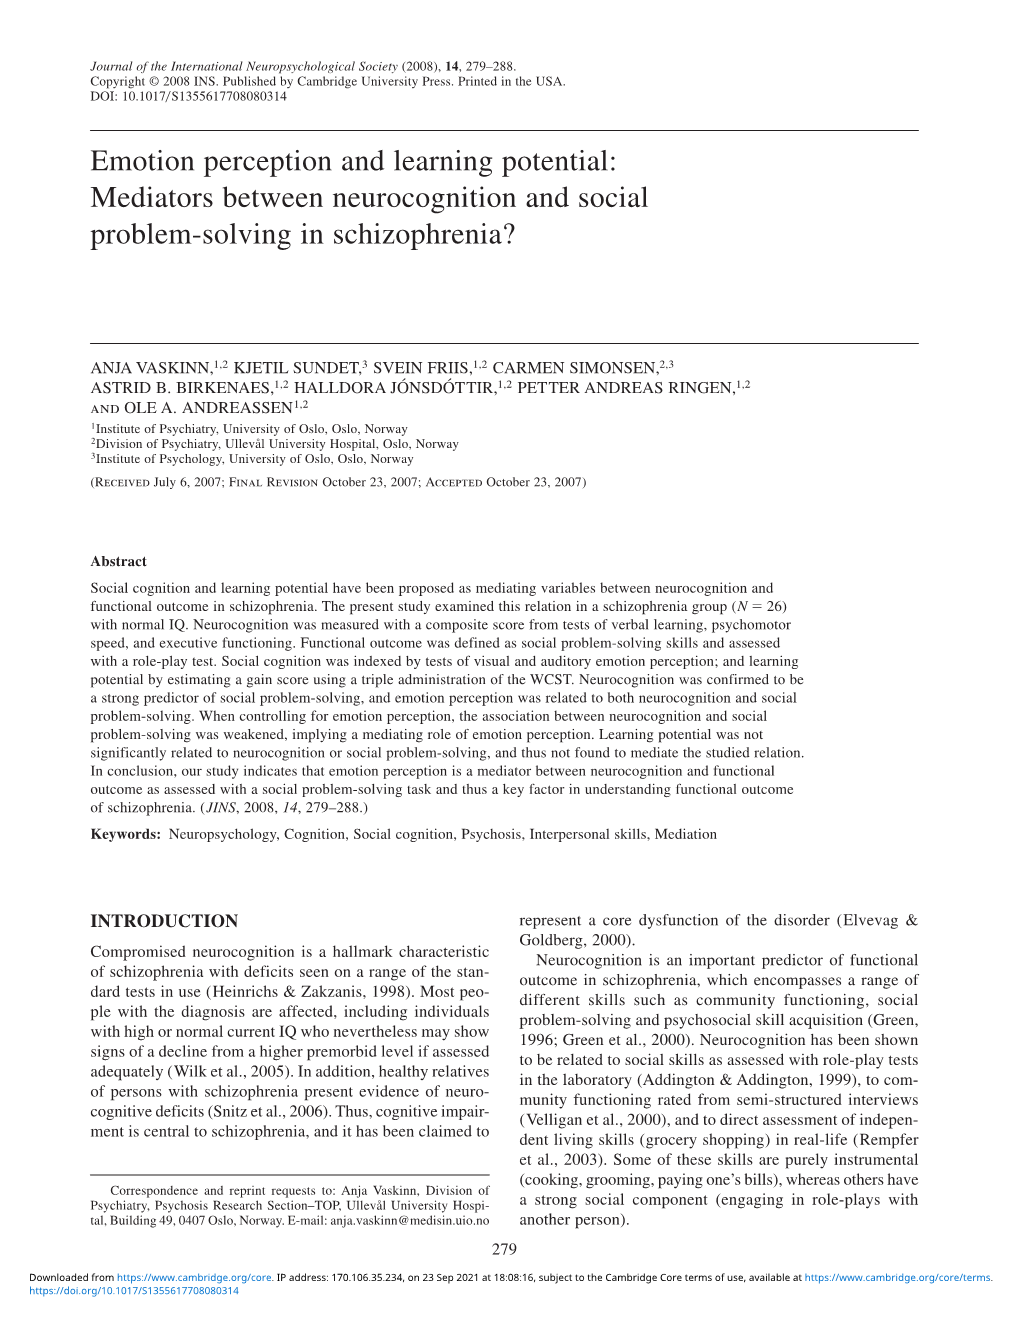 Mediators Between Neurocognition and Social Problem-Solving in Schizophrenia?